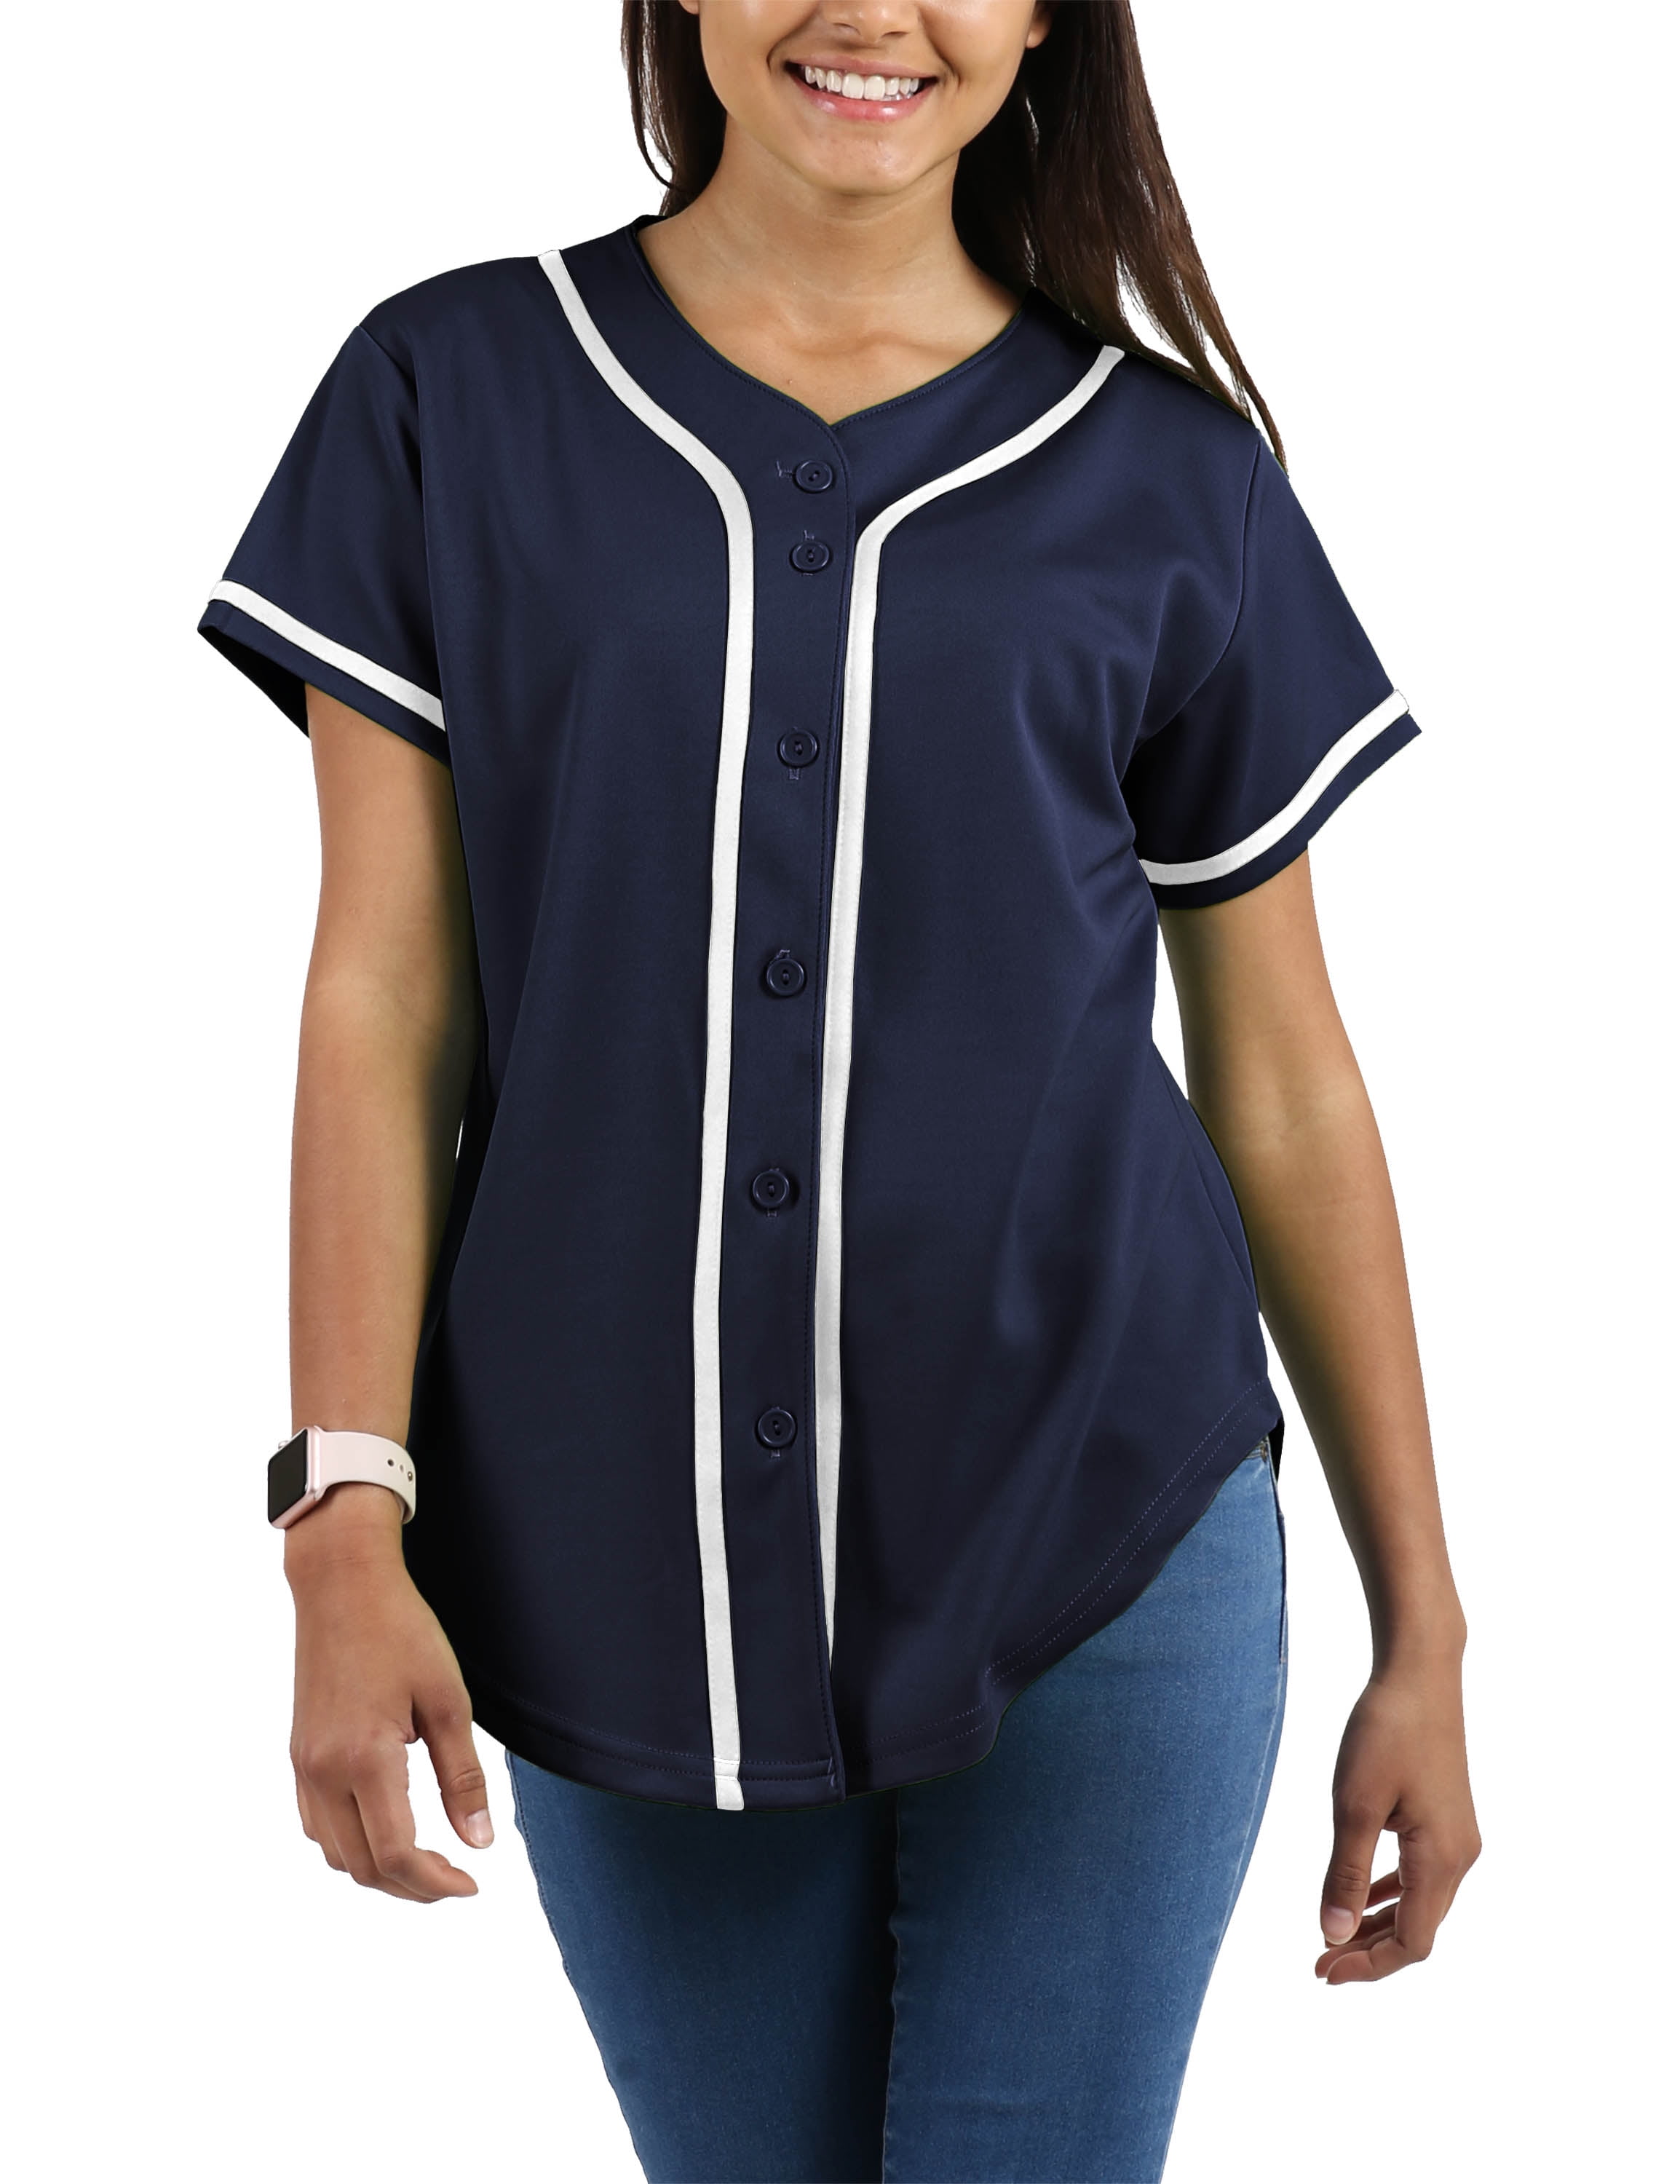 Buy Women Baseball Jersey Button Down Tee Short Sleeve Shirt Sports Uniform  Softball Jersey Active T-Shirt, White, Large at .in